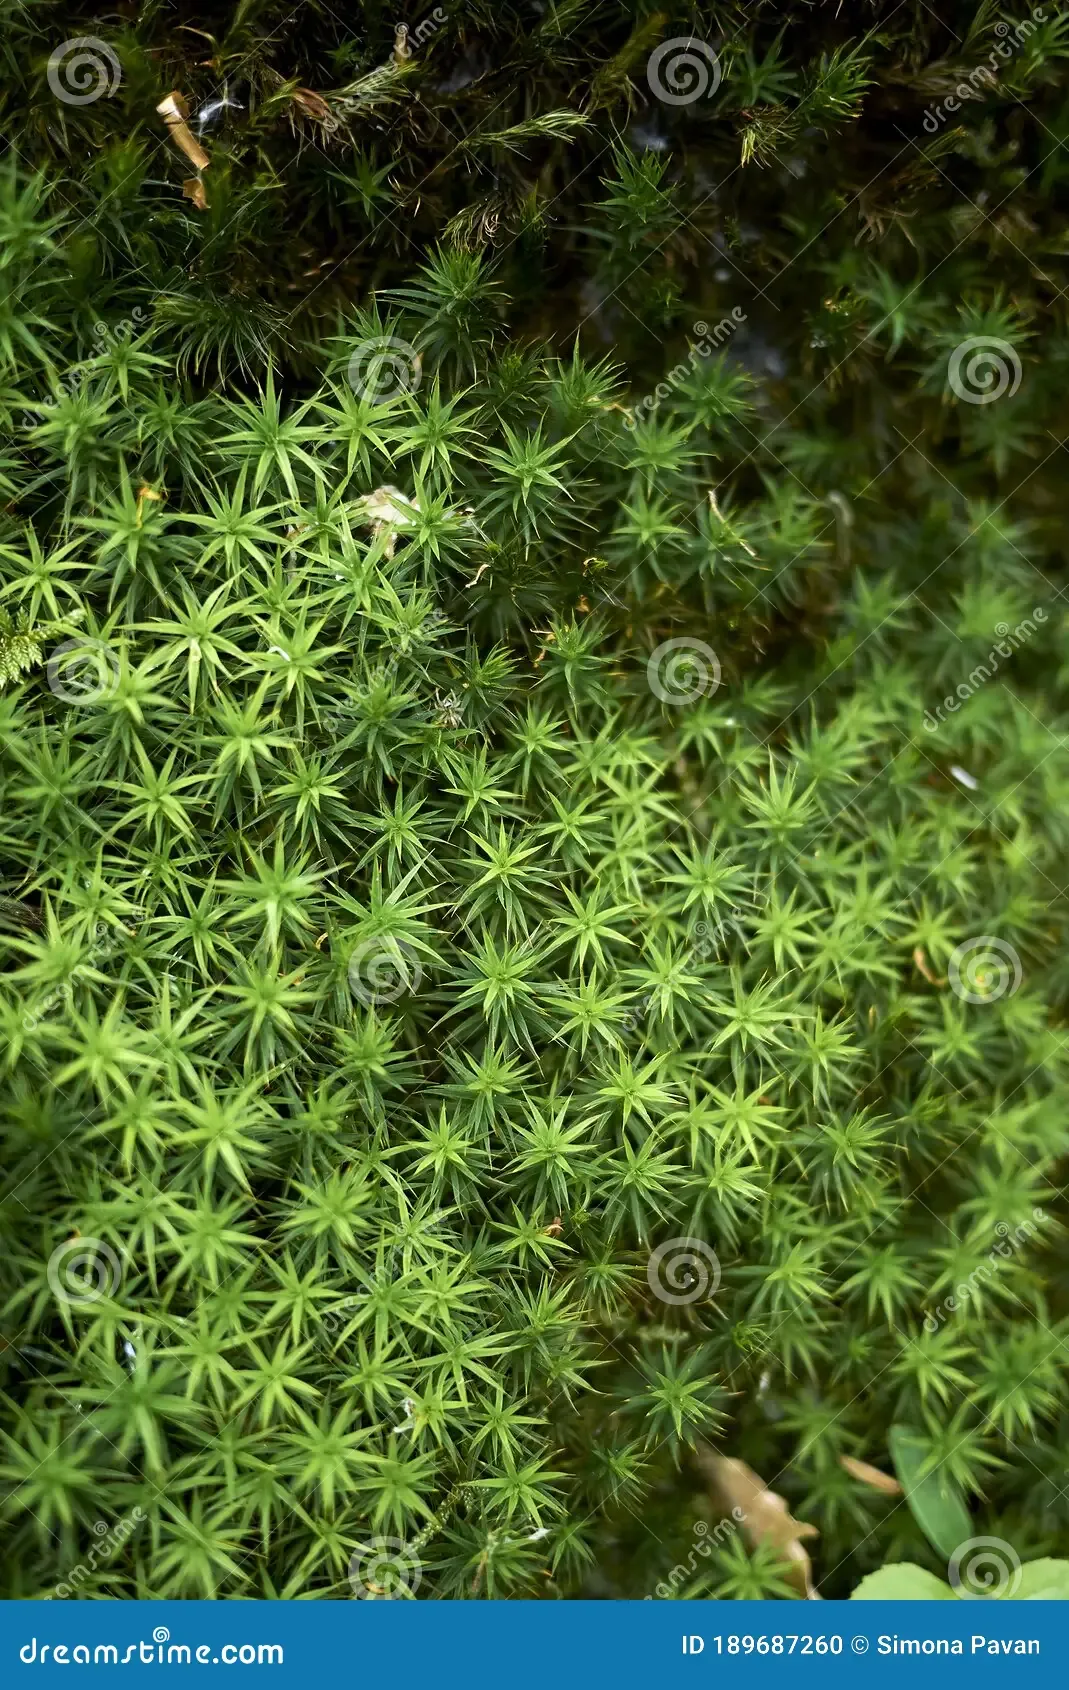 polytrichum-juniperinum-close-up-polytrichum-juniperinum-moss-close-up-189687260.jpg